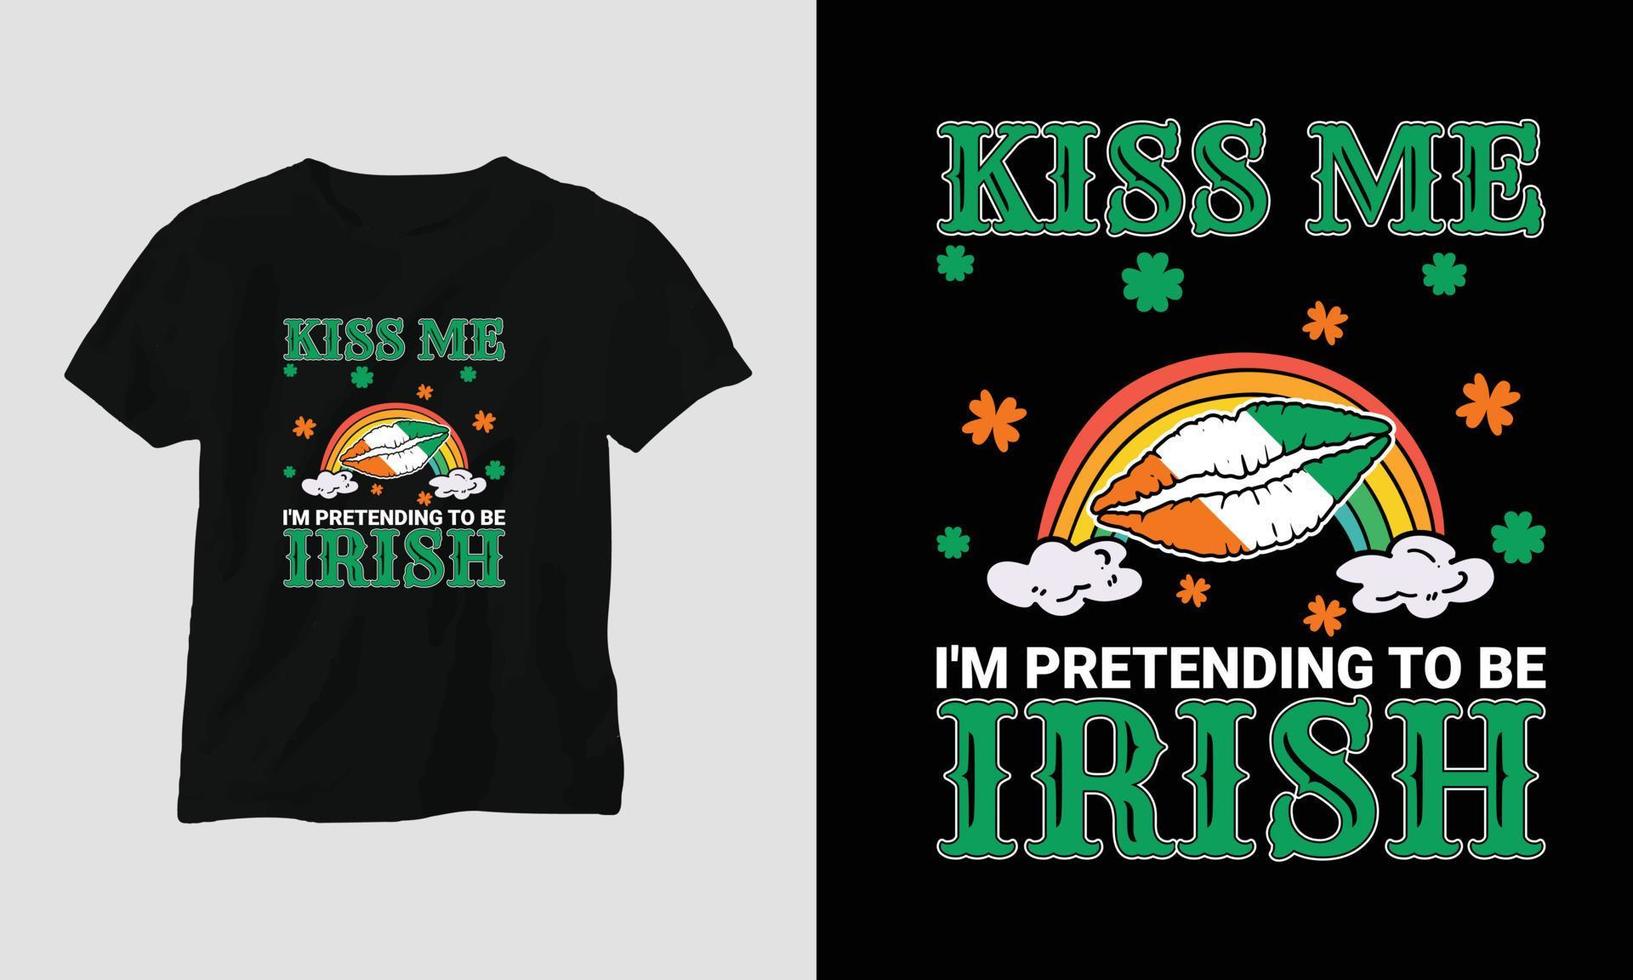 kiss me i'm pretending to be irish st Patrick's day quote vector t shirt design